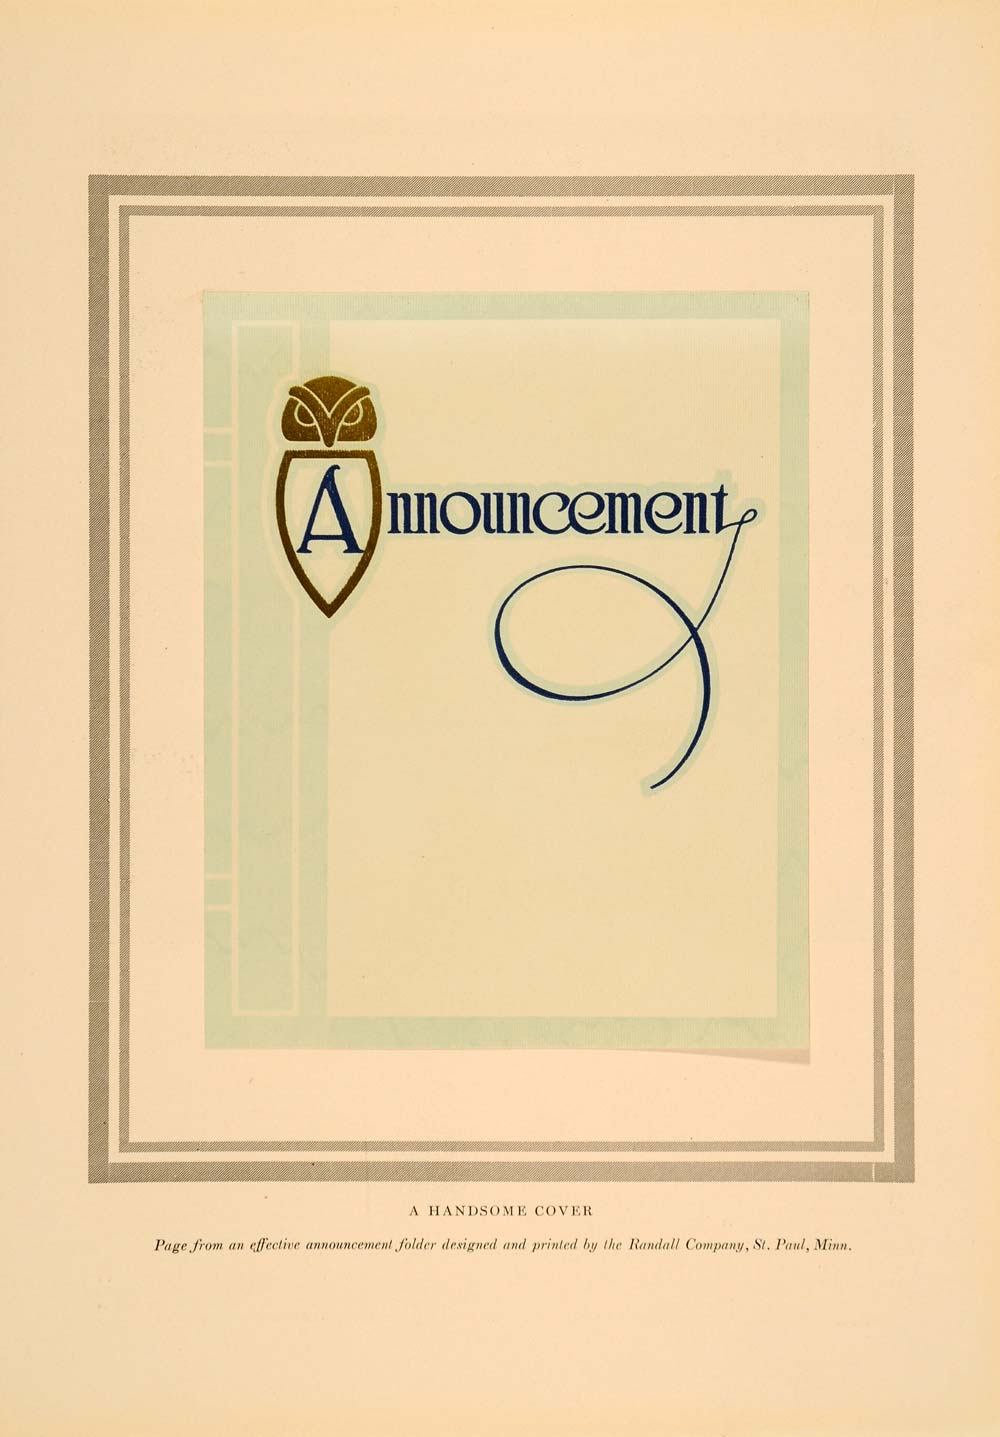 1913 Announcement Cover Lithograph Design Sample NICE - ORIGINAL PA1